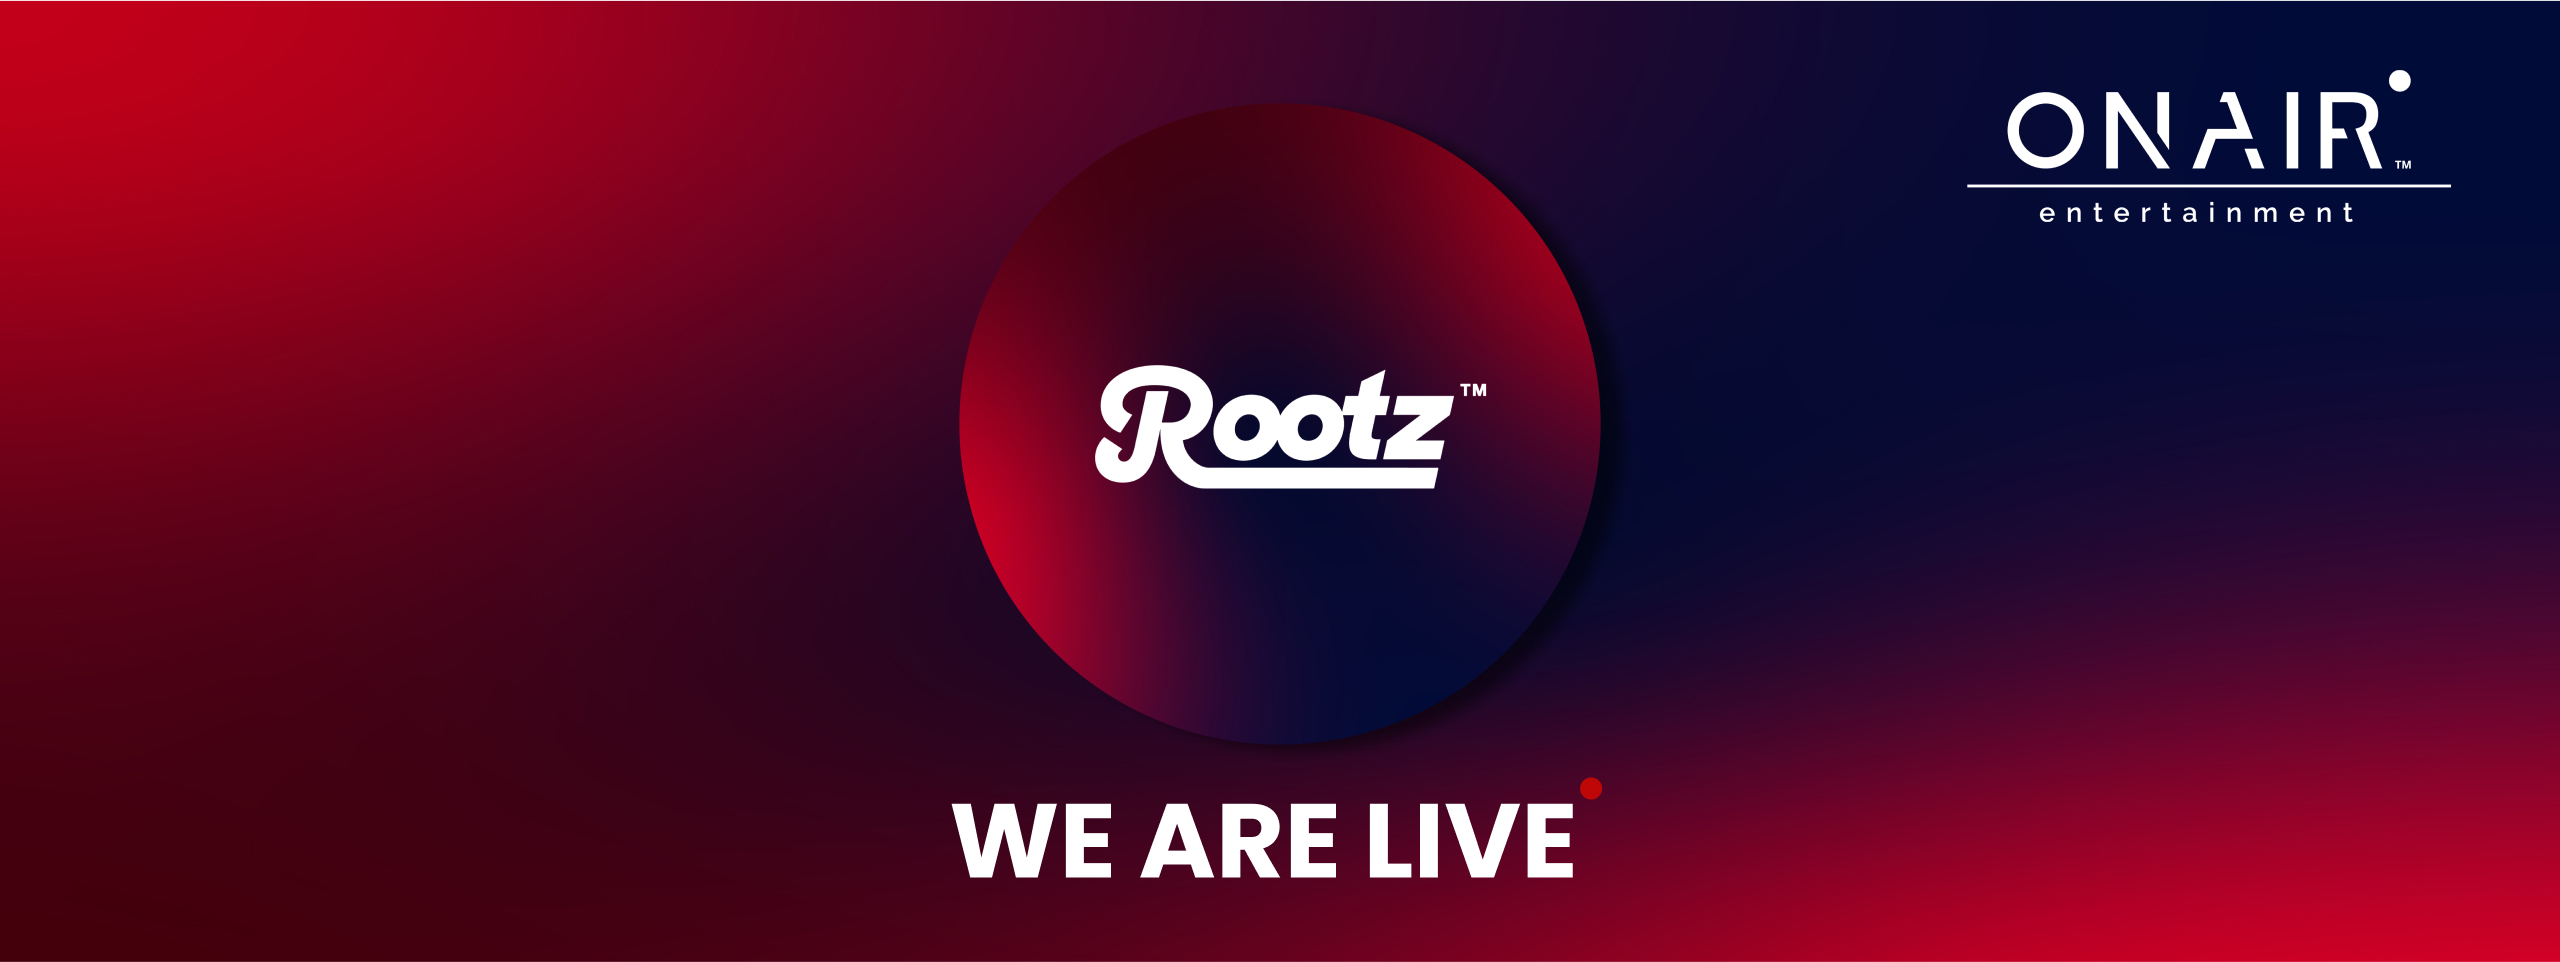 Rootz logo, representing partnership agreement with OnAir Entertainment.